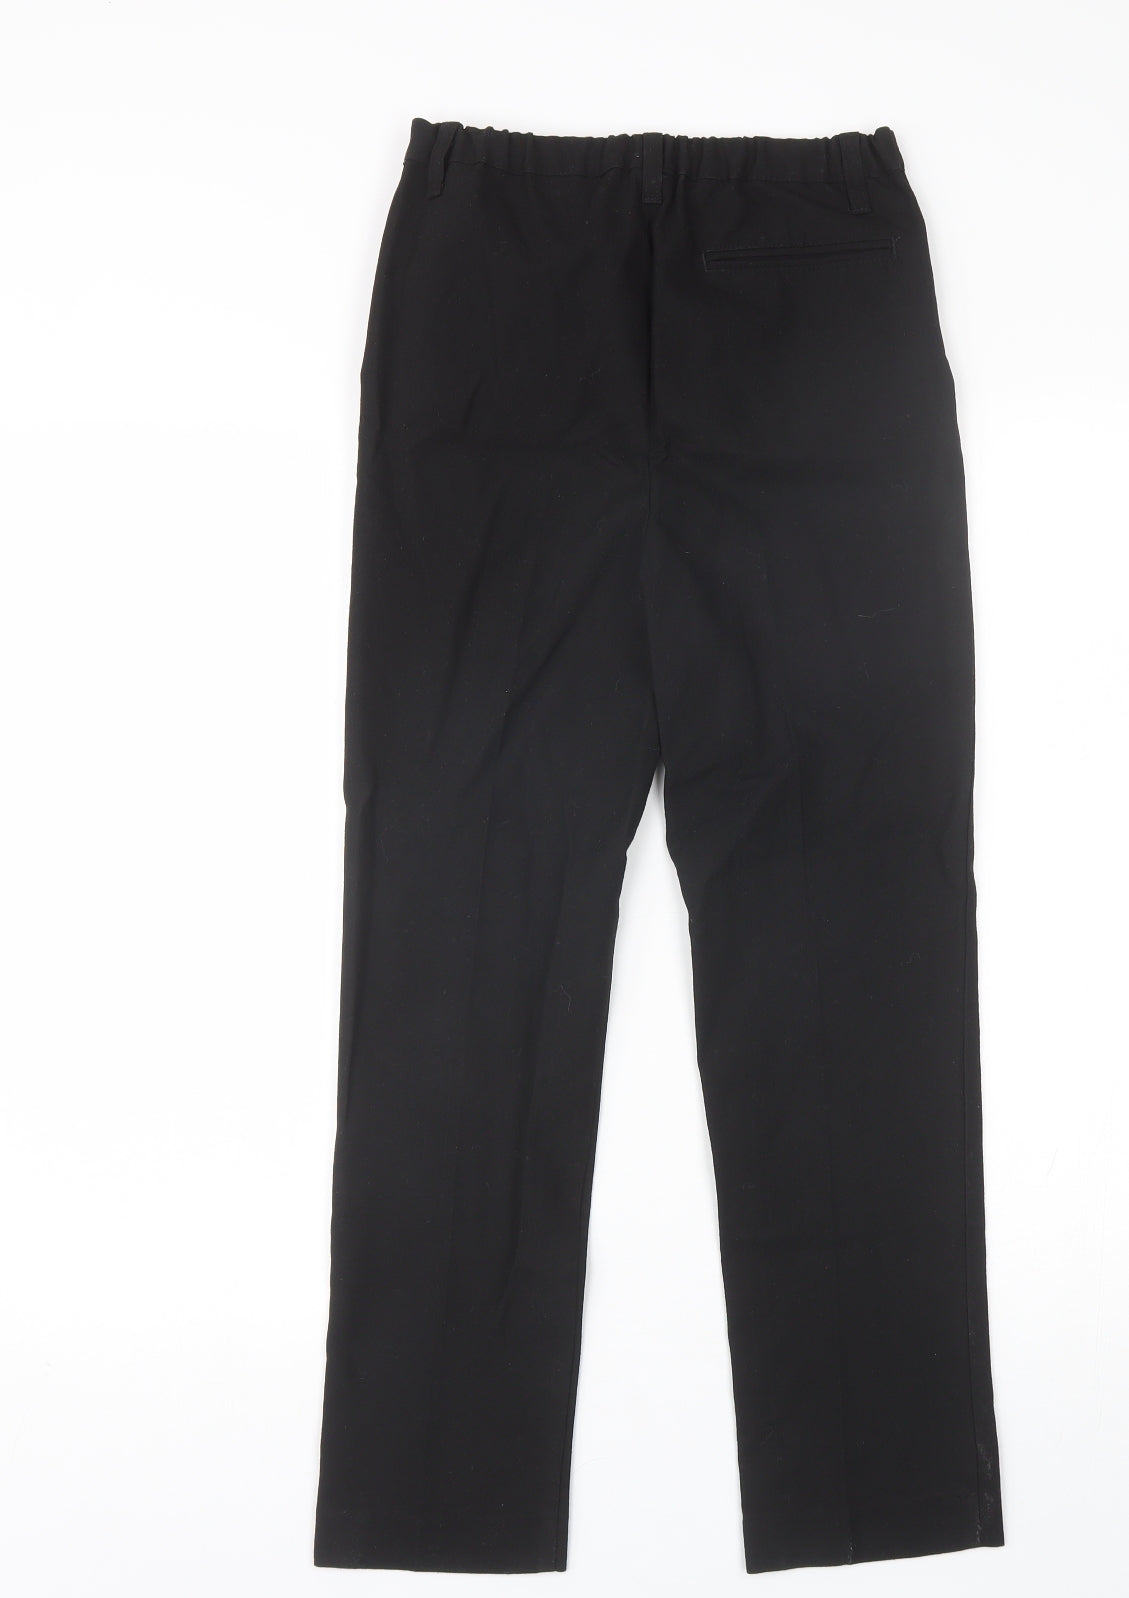 TU Boys Black  Polyester Dress Pants Trousers Size 11 Years  Regular